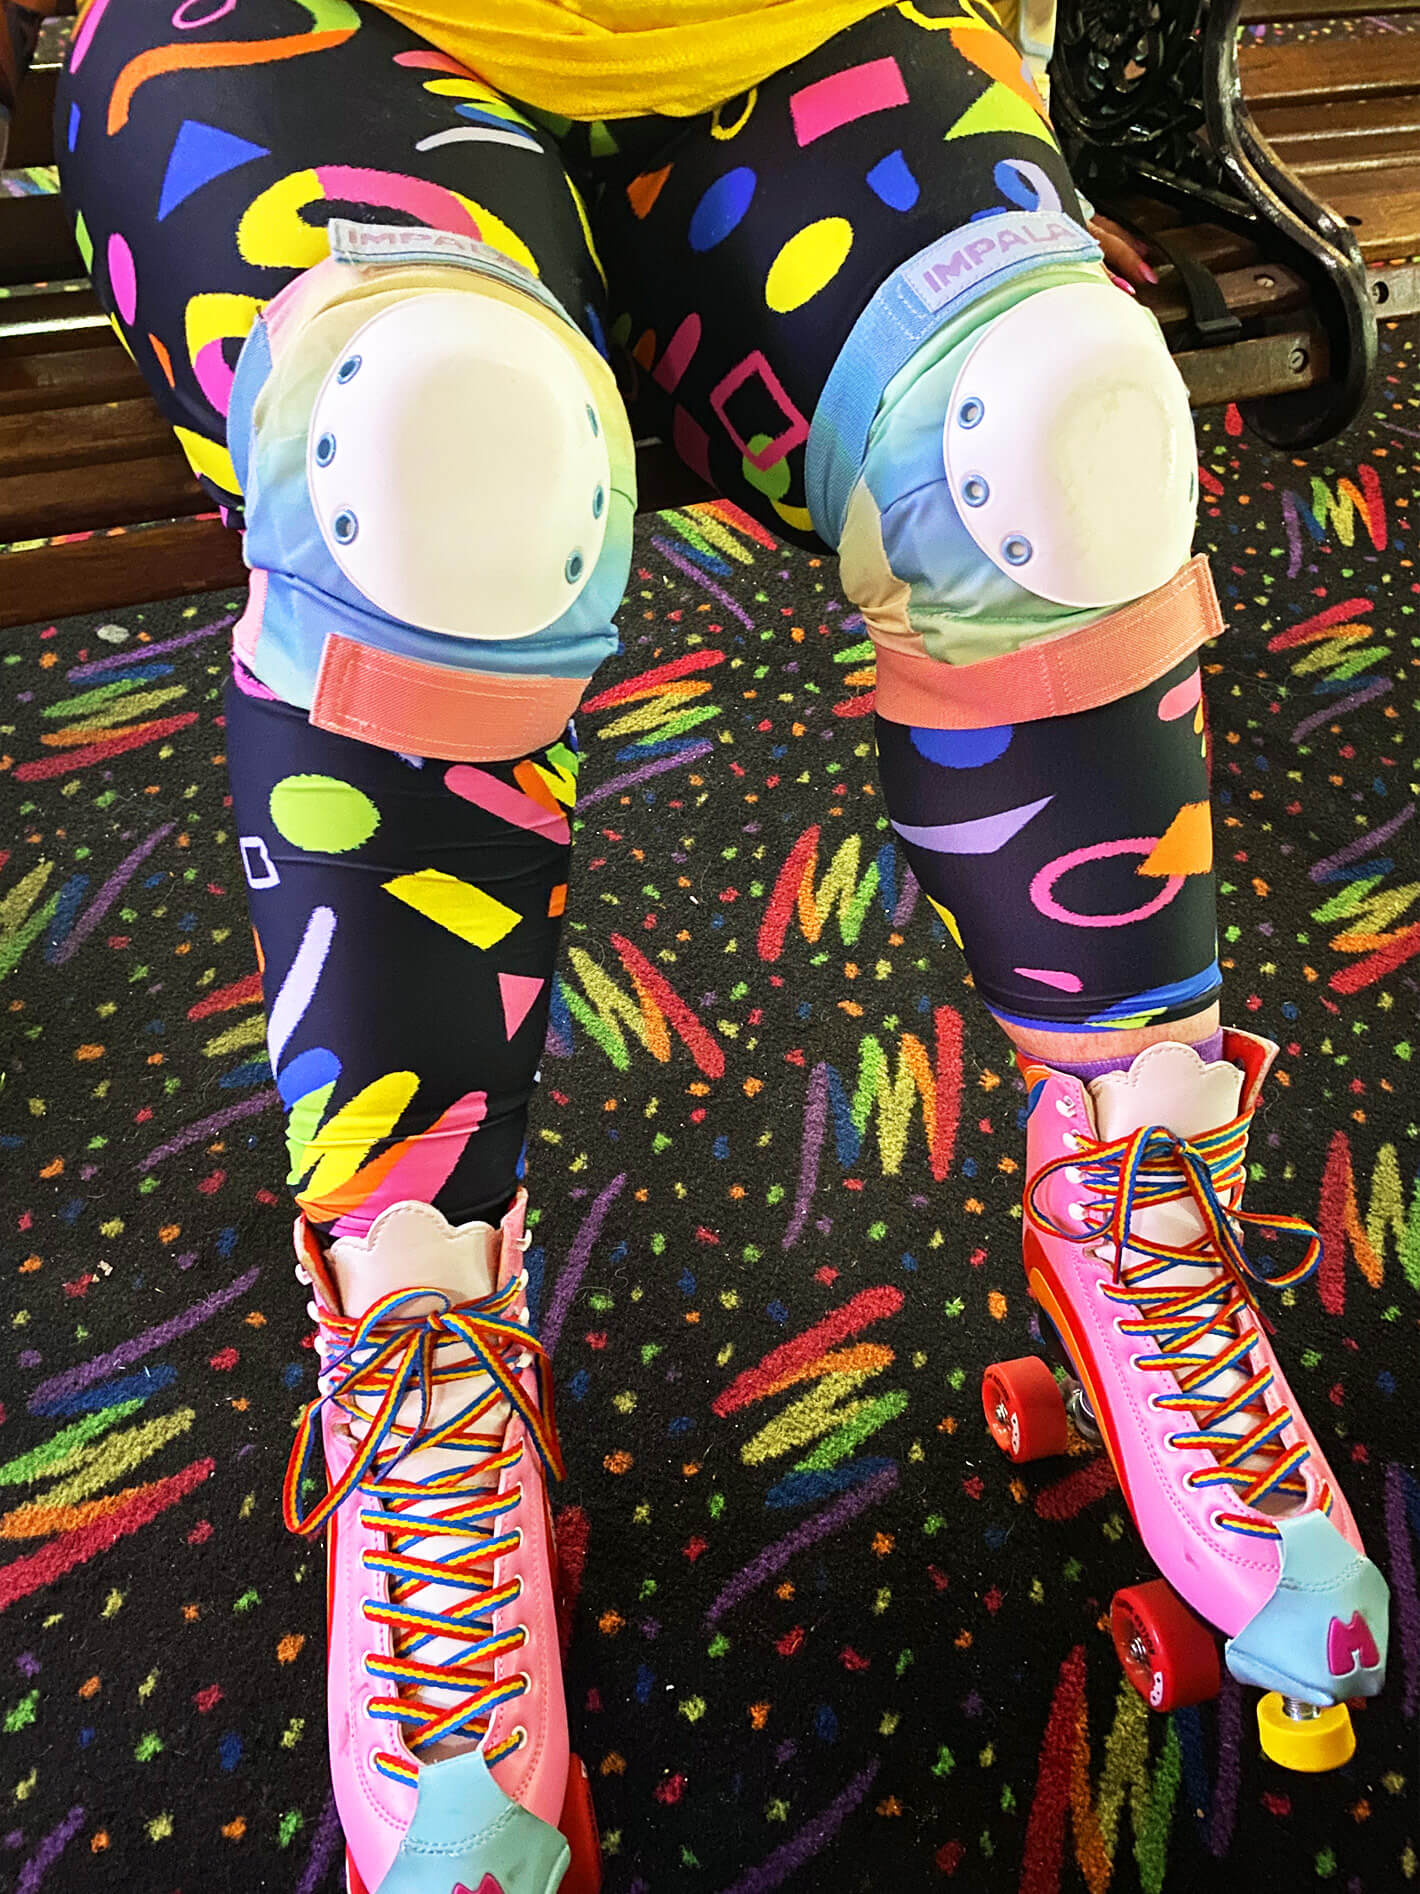 Retro roller skating carpet leggings.